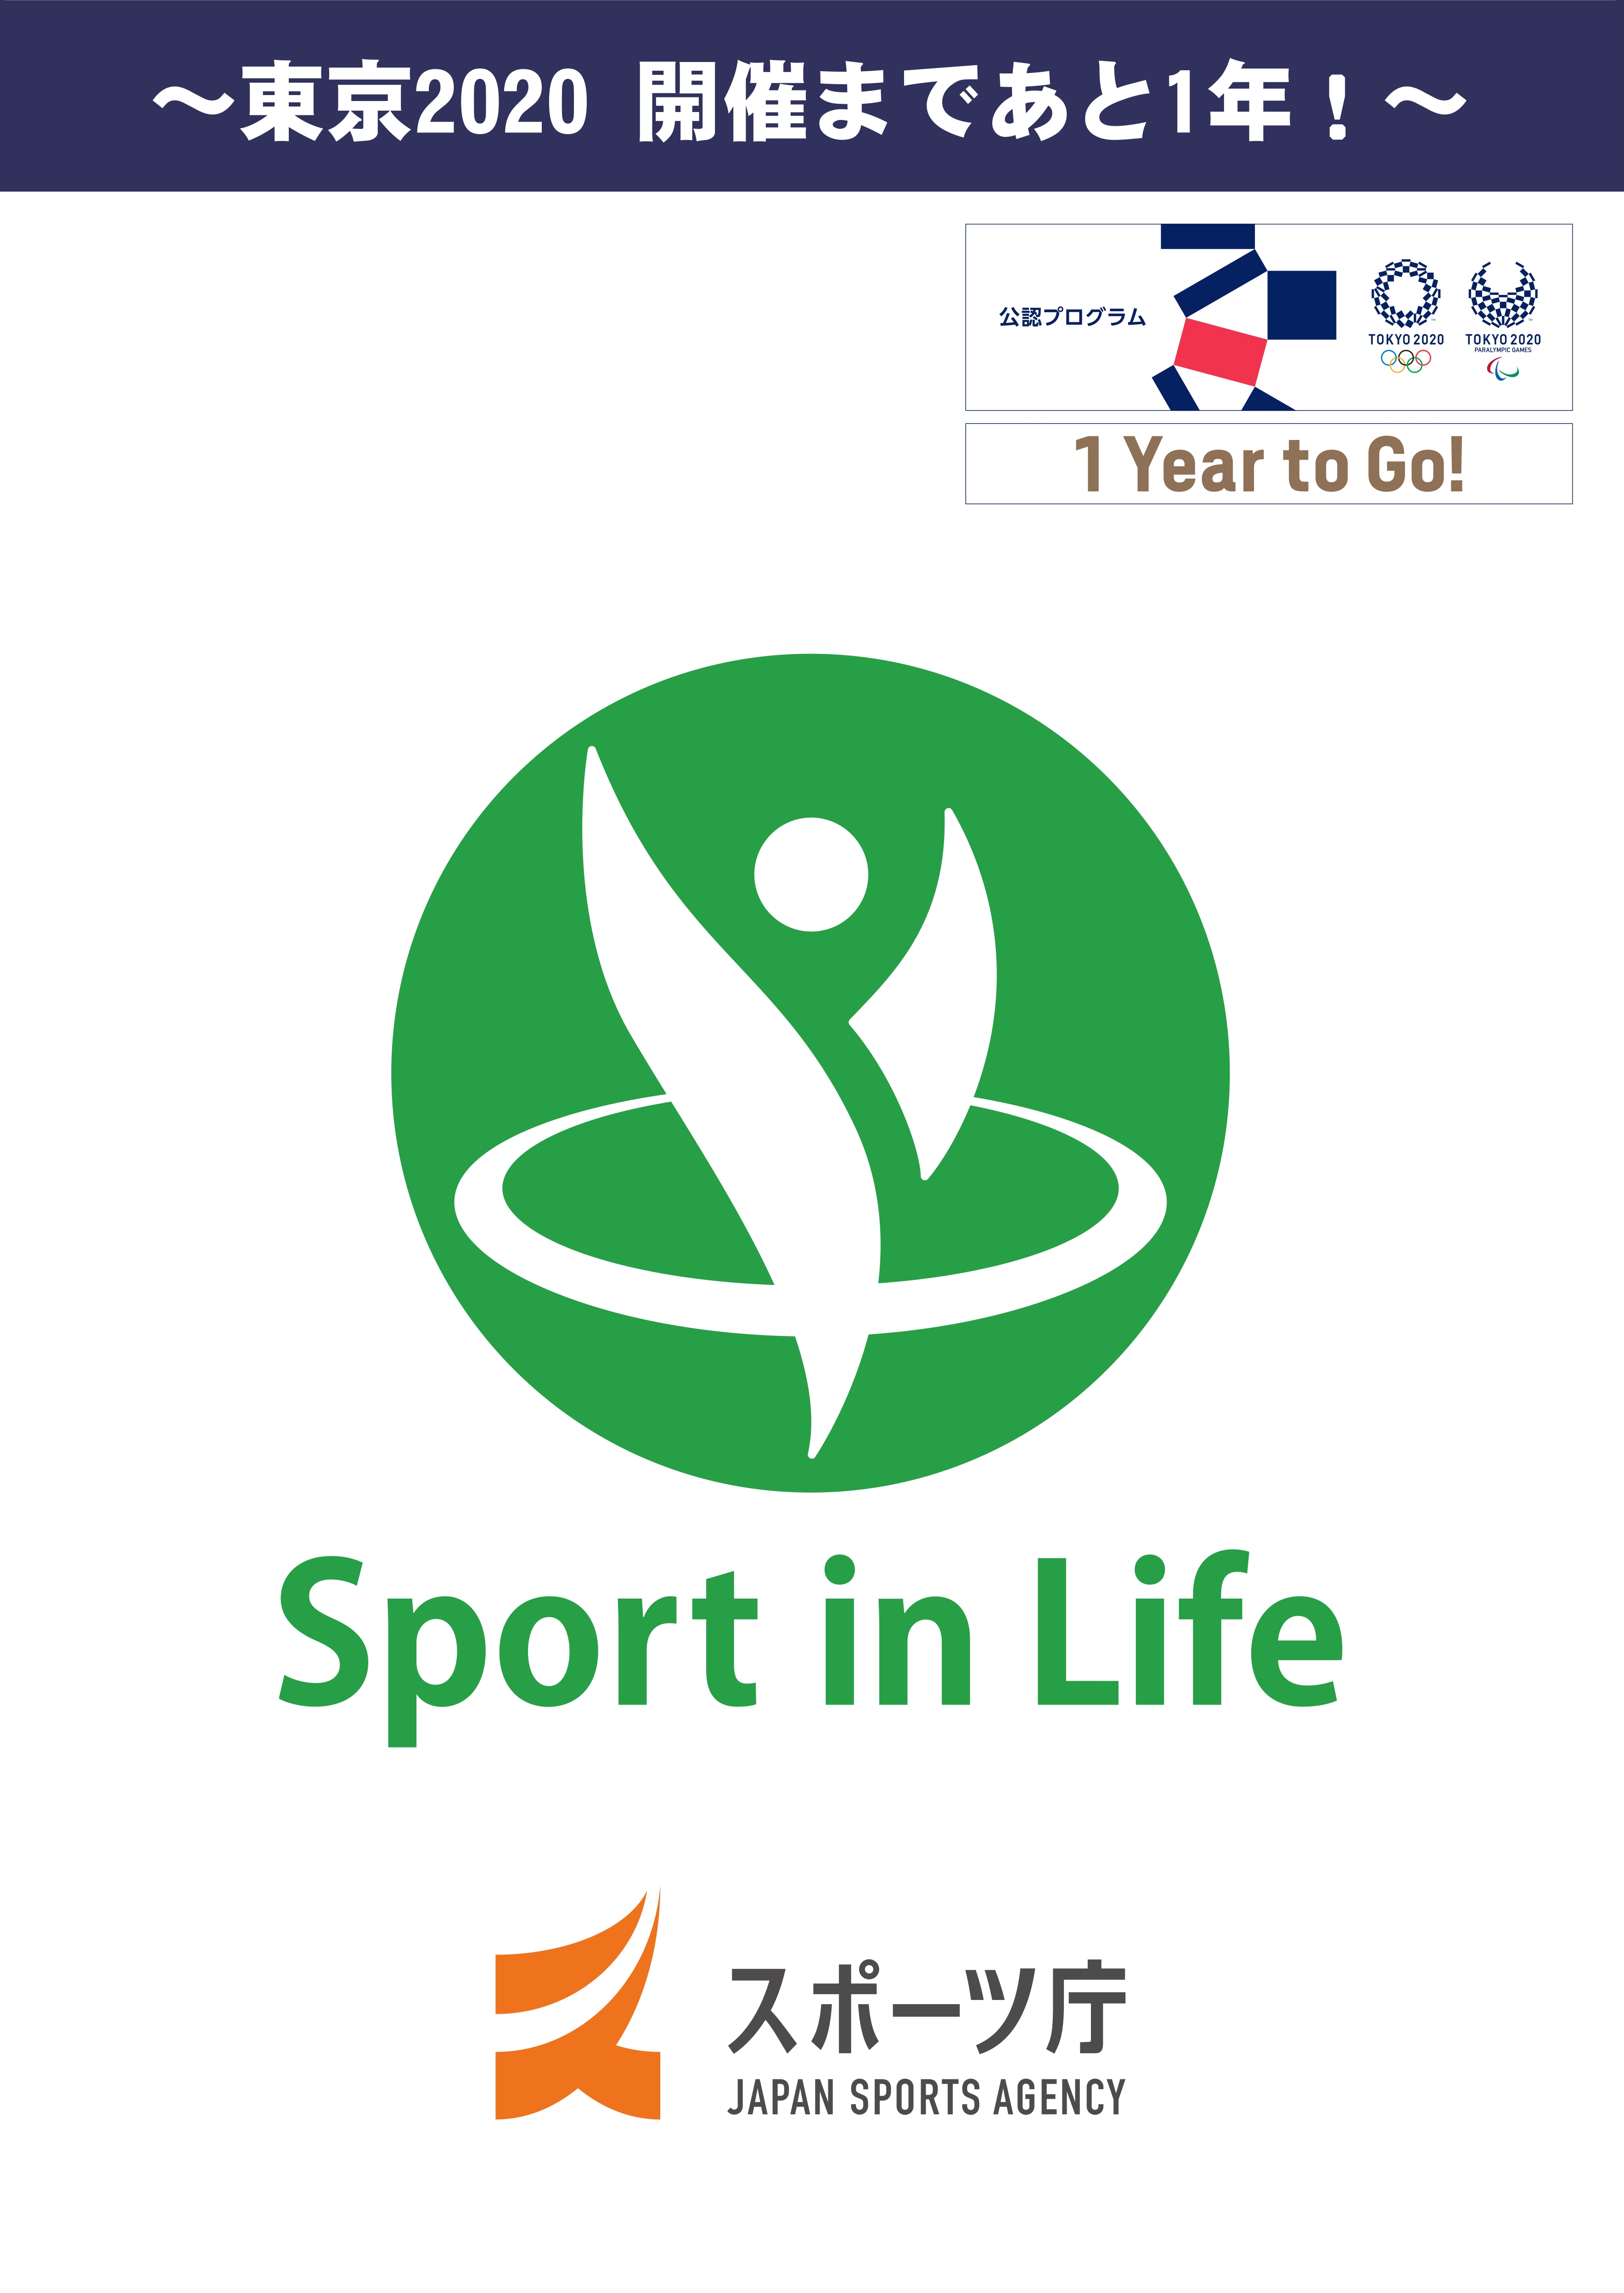 Sport In Life プロジェクト を本日スタート 年東京大会のレガシーに向けてスポーツをもっと身近に ロゴマークの申請受付も開始 スポーツ庁